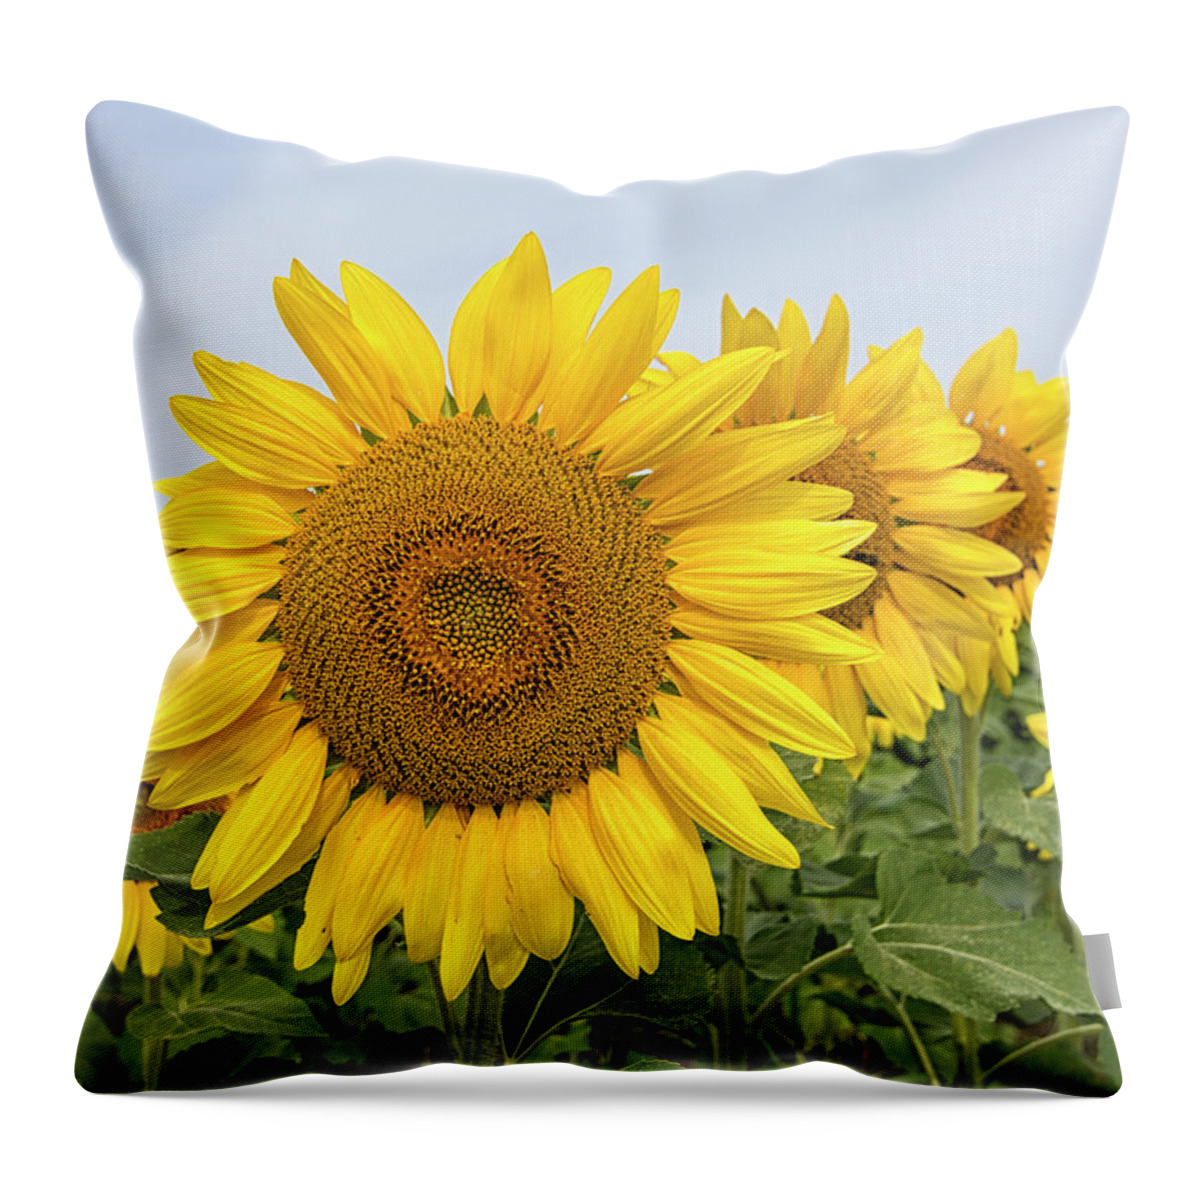 Sunflower Throw Pillow featuring the photograph Sunflowers by Deborah Ritch